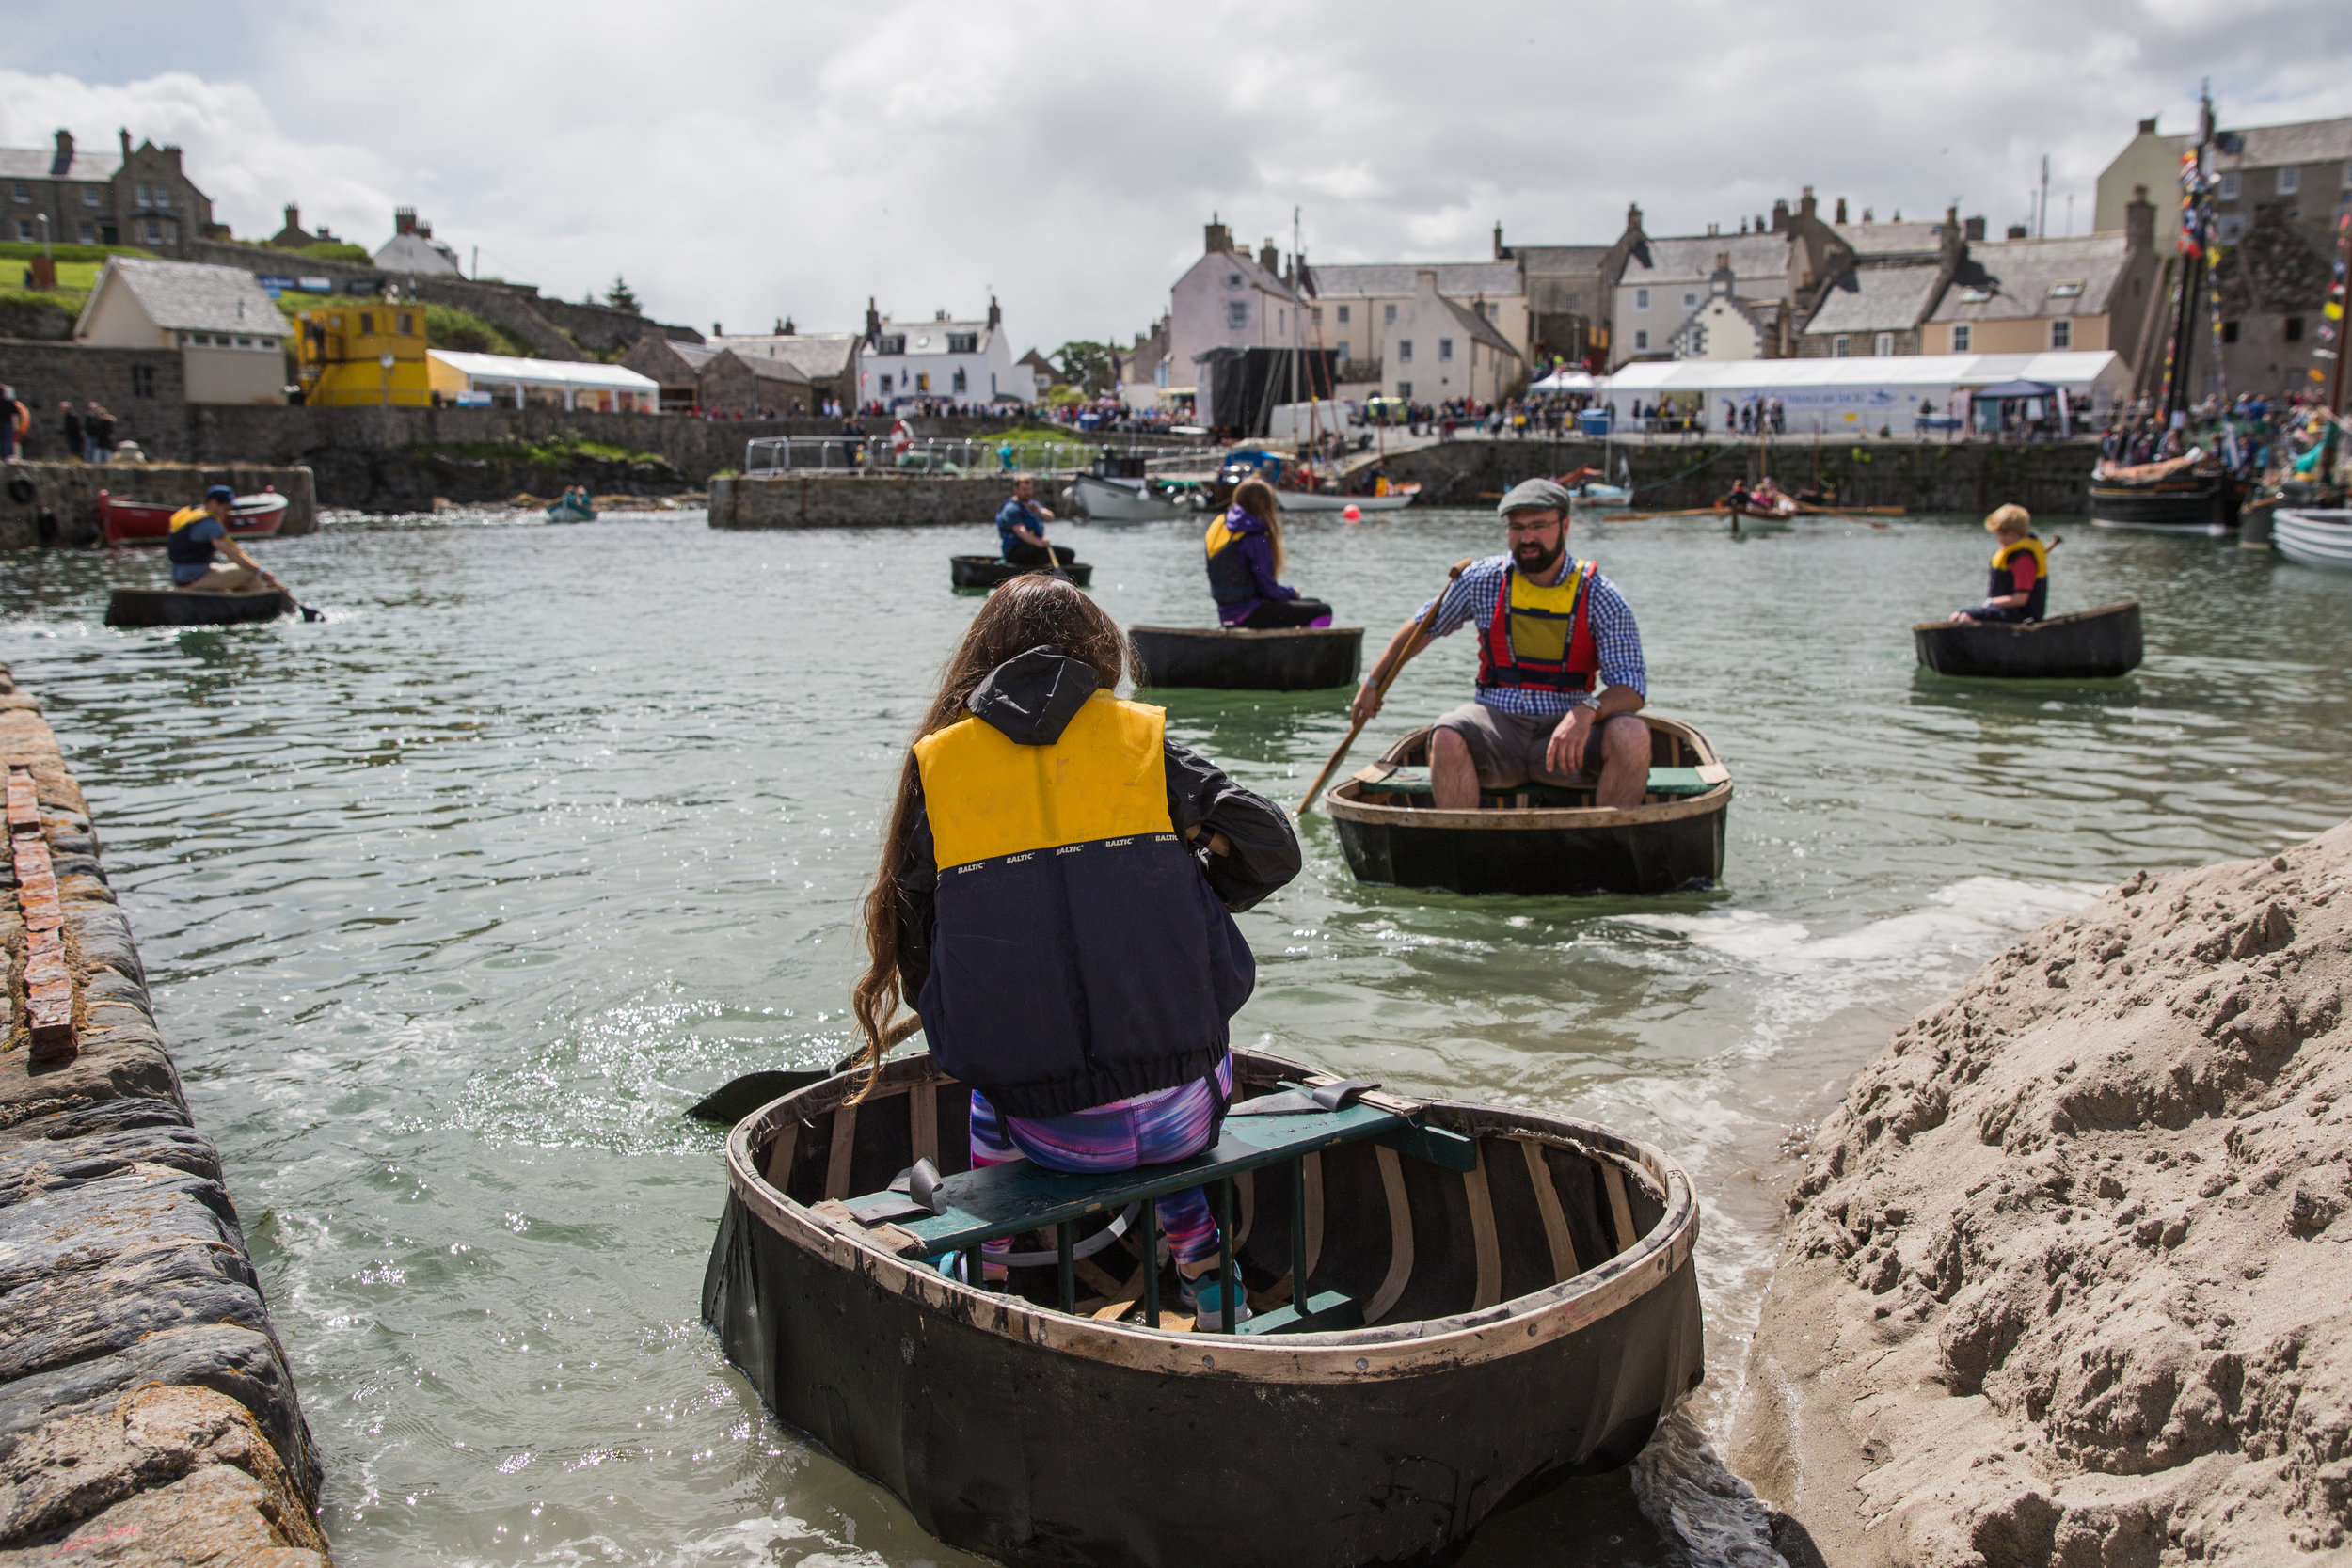  Portsoy Traditional Boat Festival. 